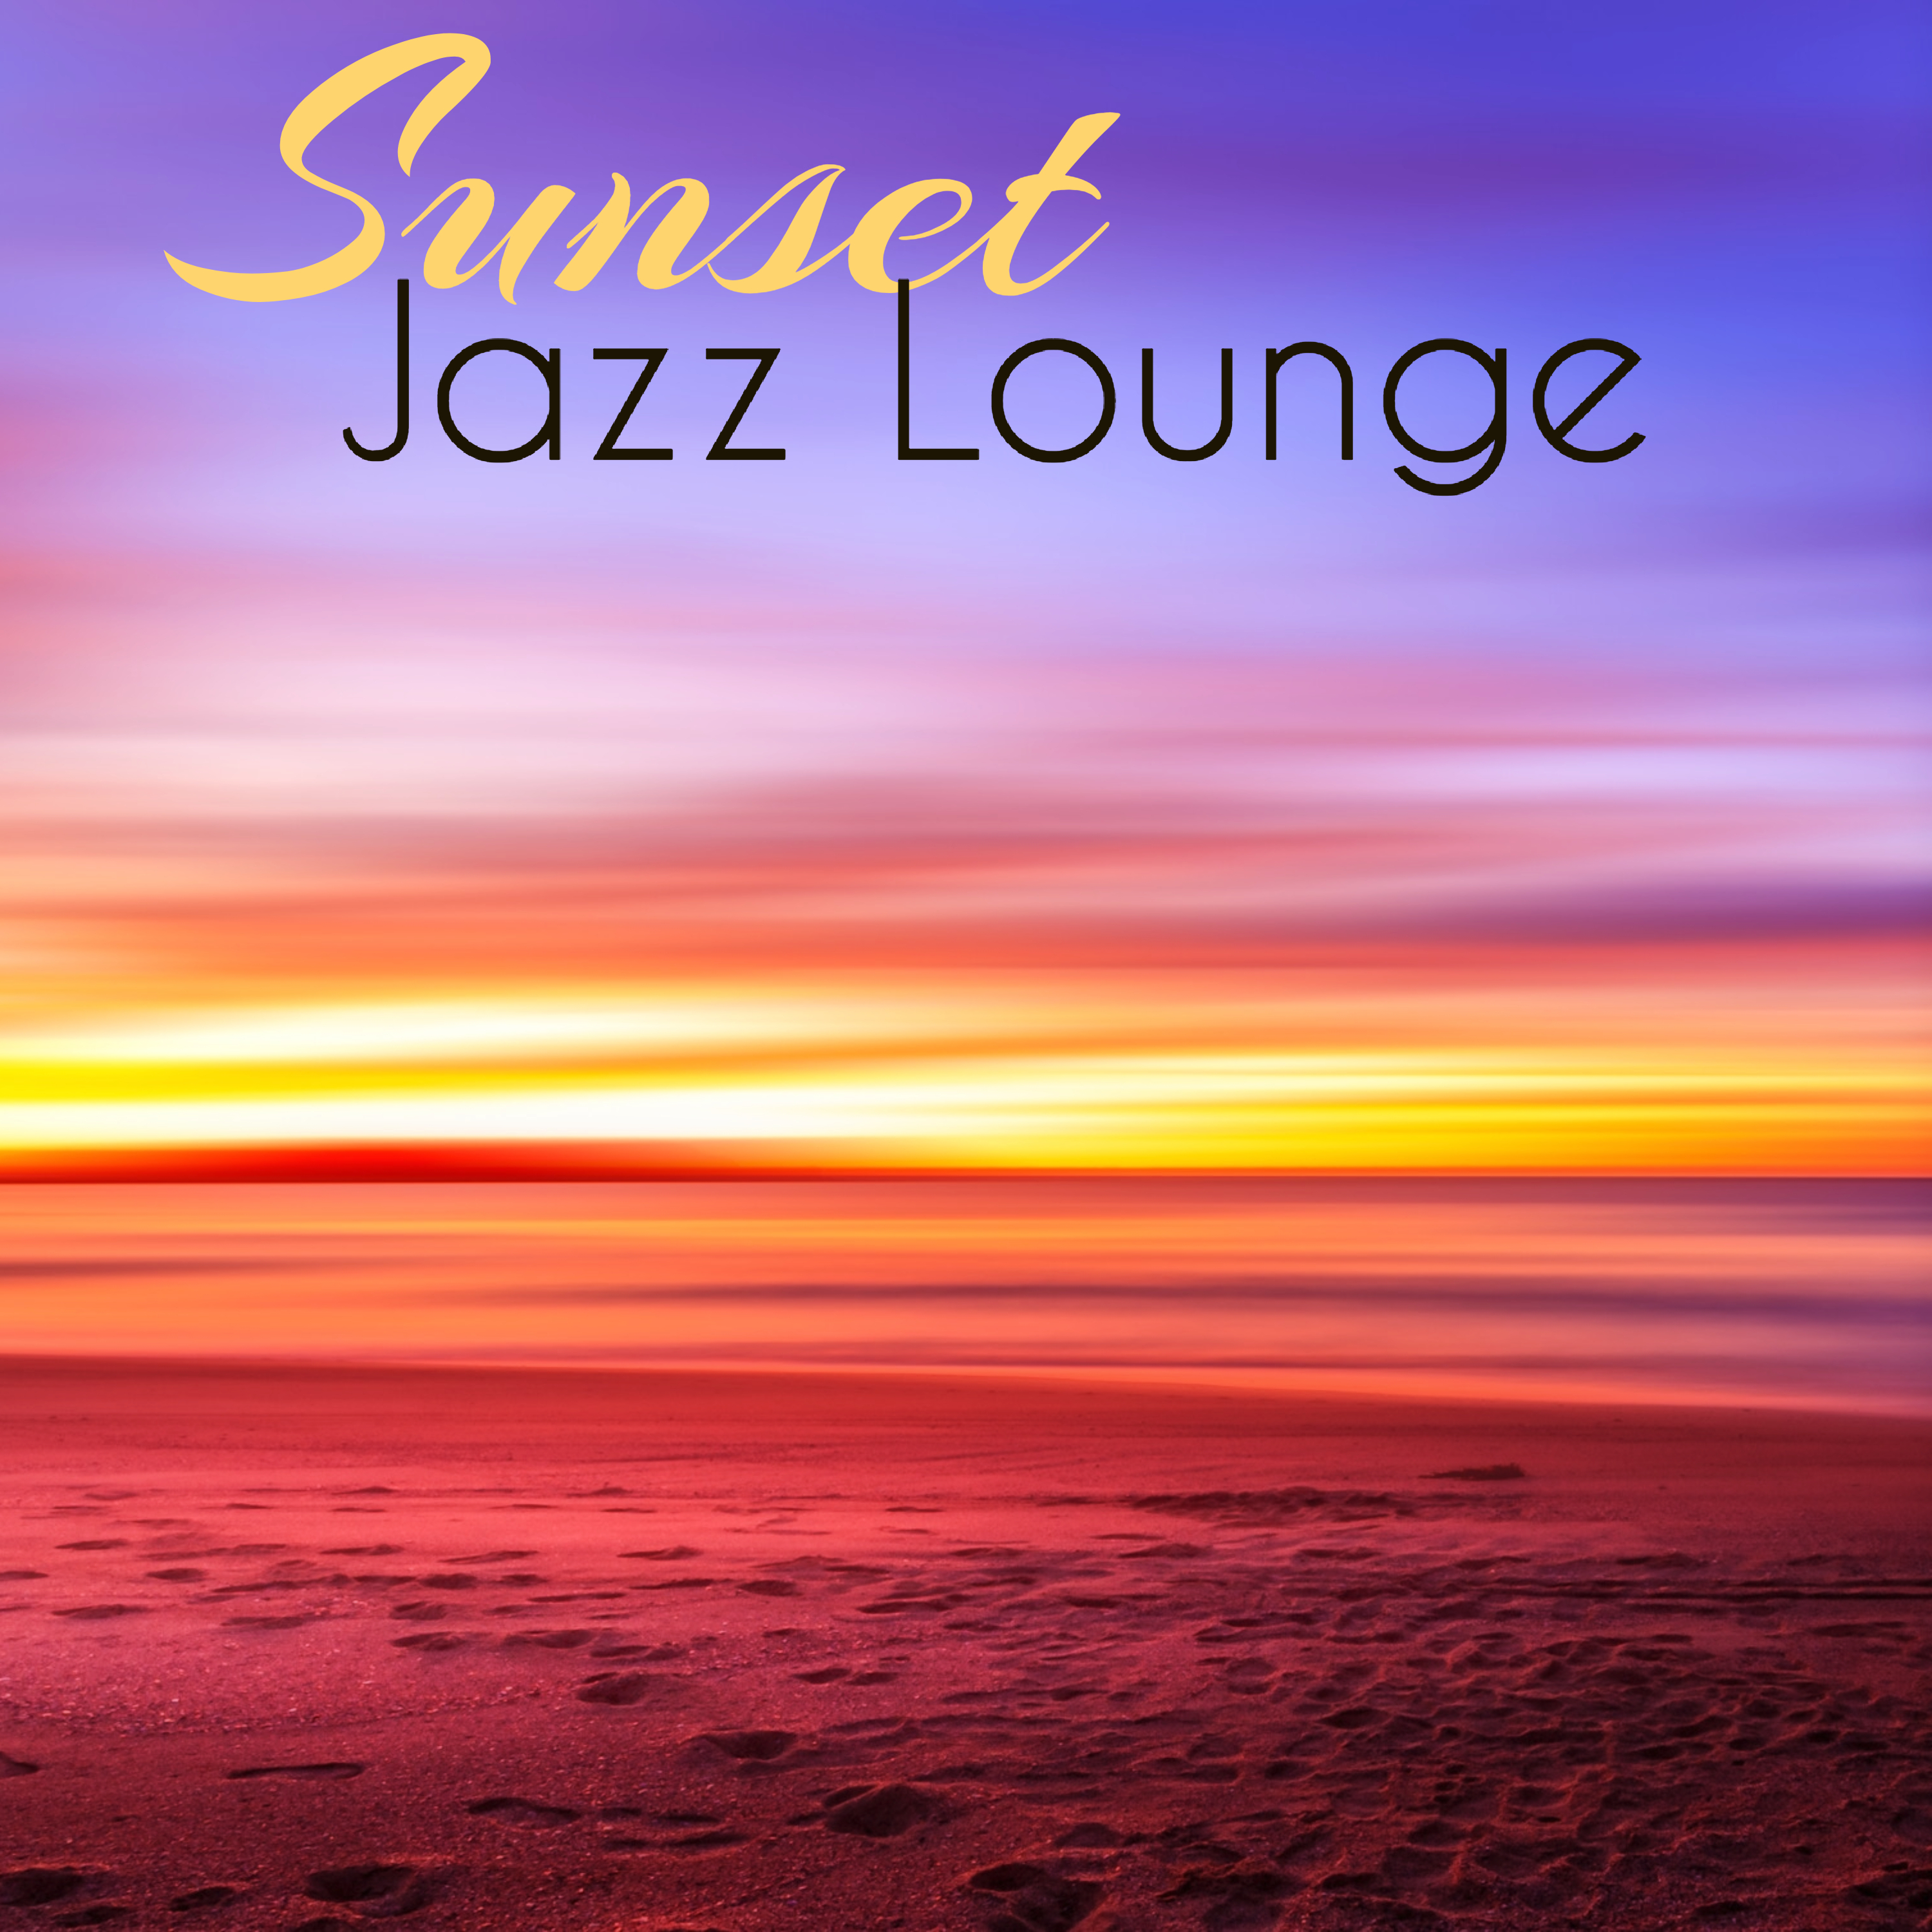 Love Your Lounge - Latin Sax Sound